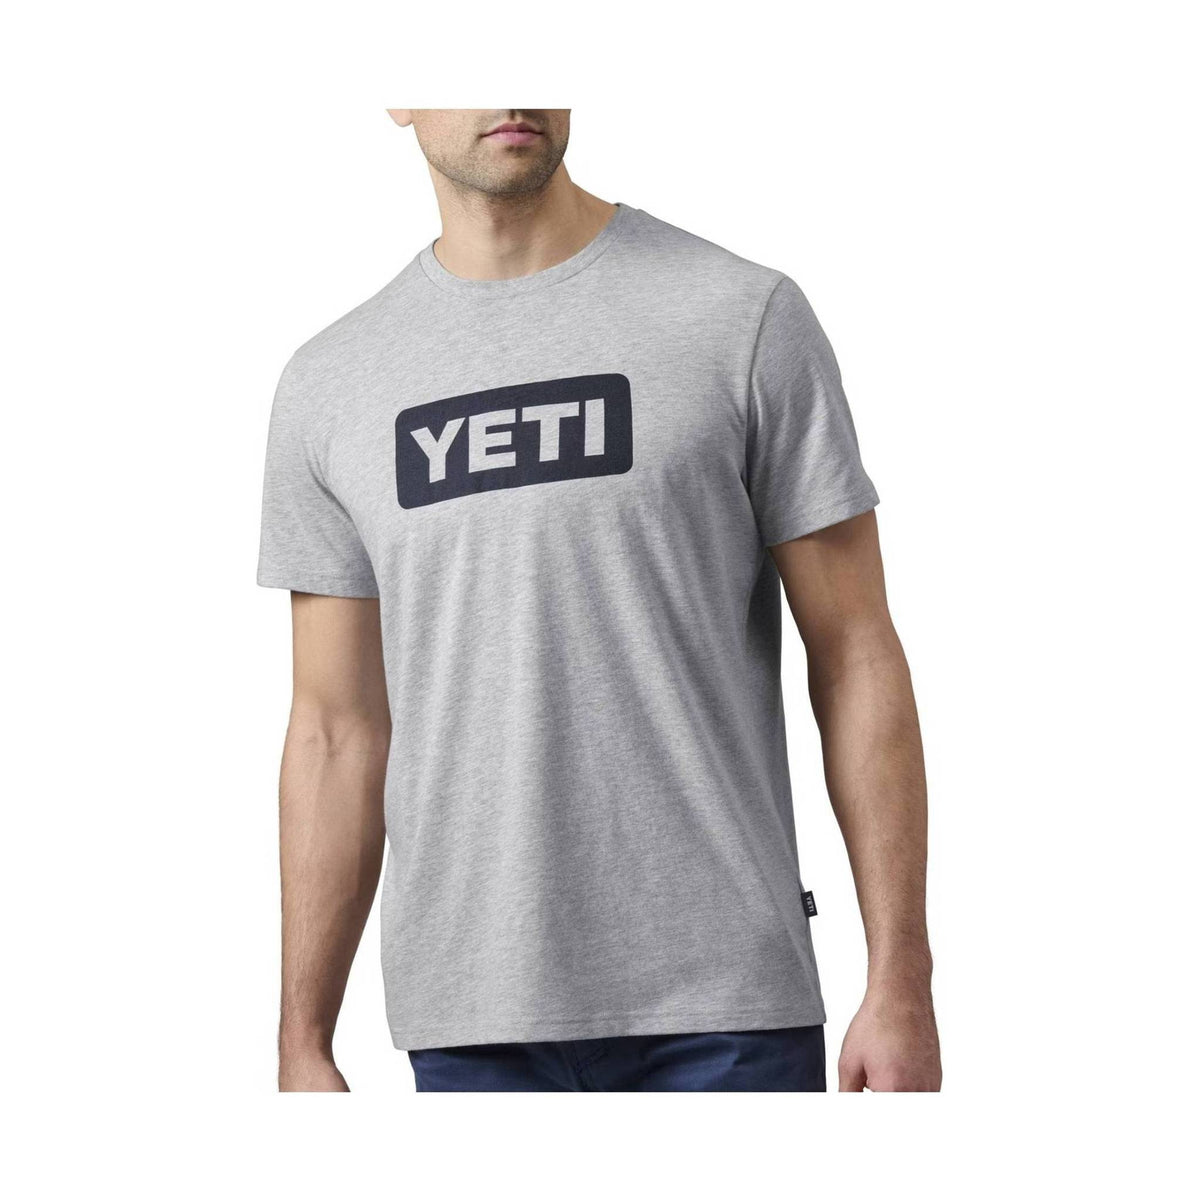 YETI YETI Men's Premium Logo Badge Tee - Indigo $ 29.99